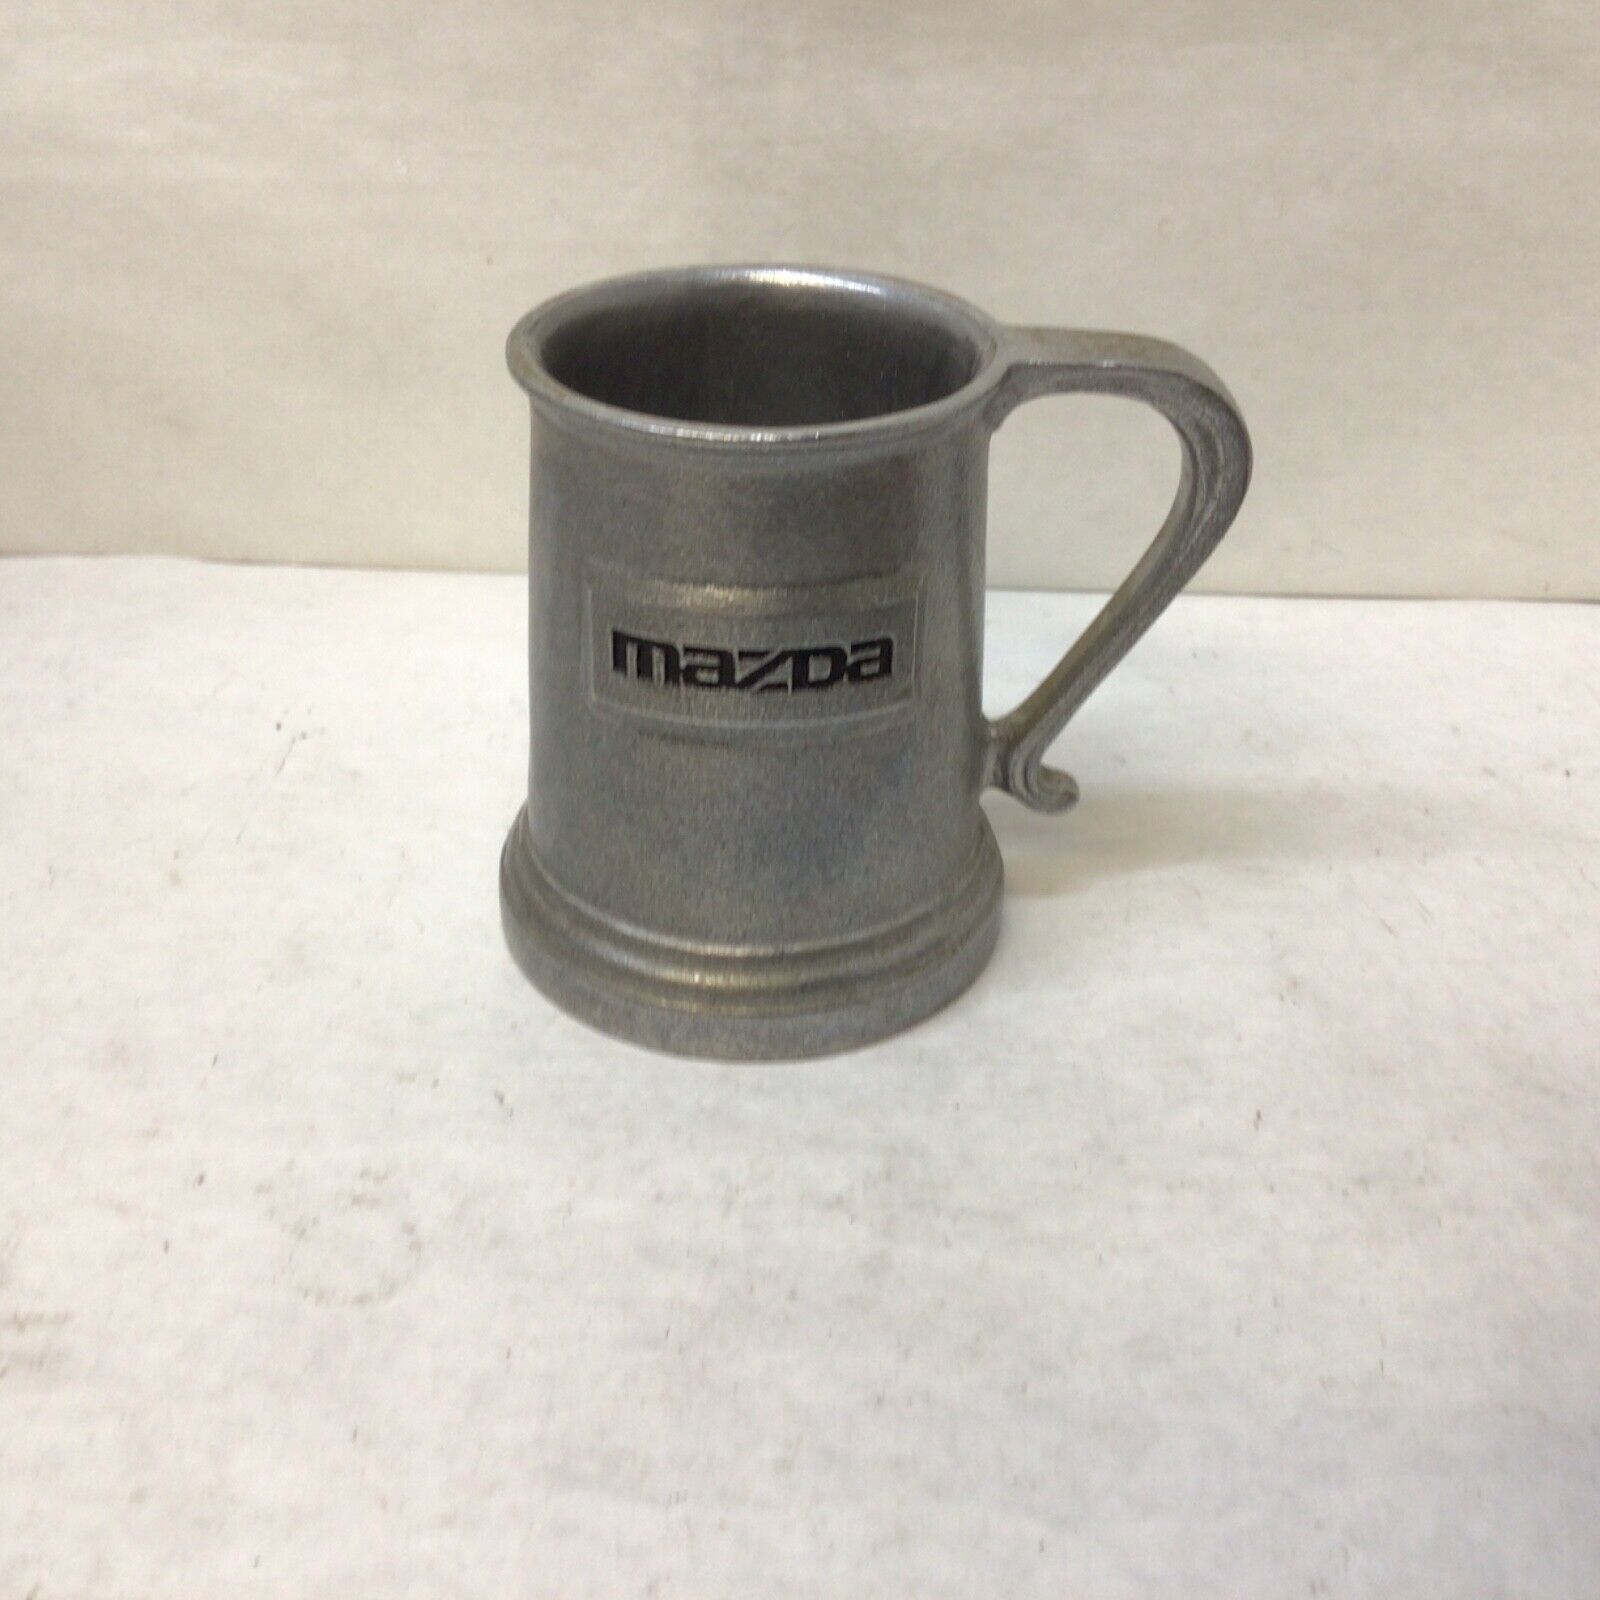 Vintage Mazda Beer Mug Die-Cast Pewter Made in USA Wilton Advertising Stein Cup